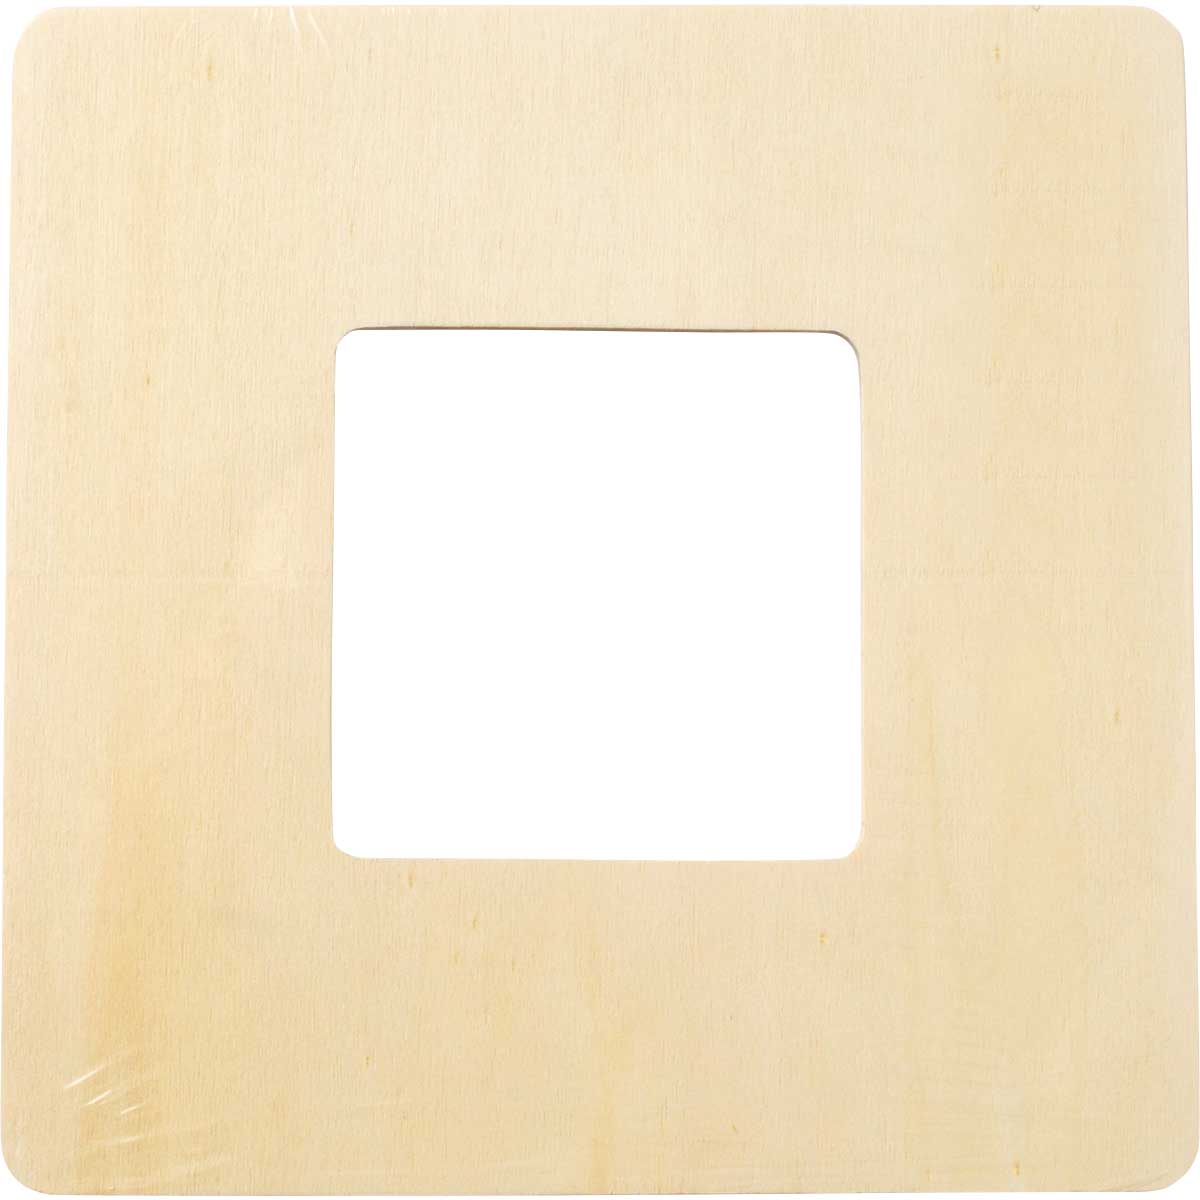 Plaid ® Wood Surfaces - Frames - Square - 97540